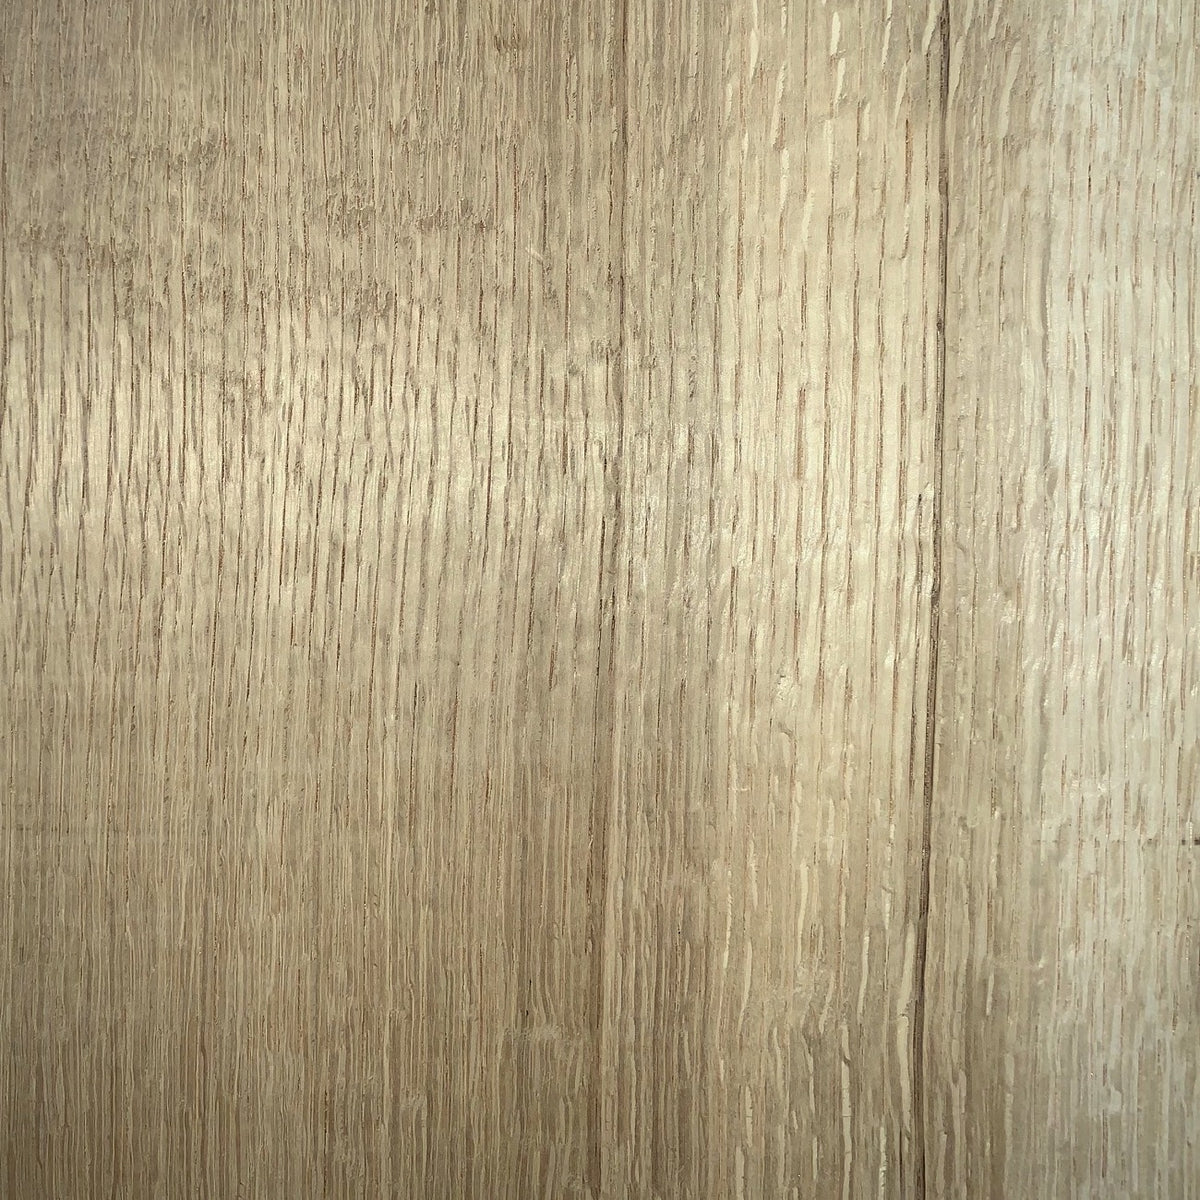 Oak, White - Thins